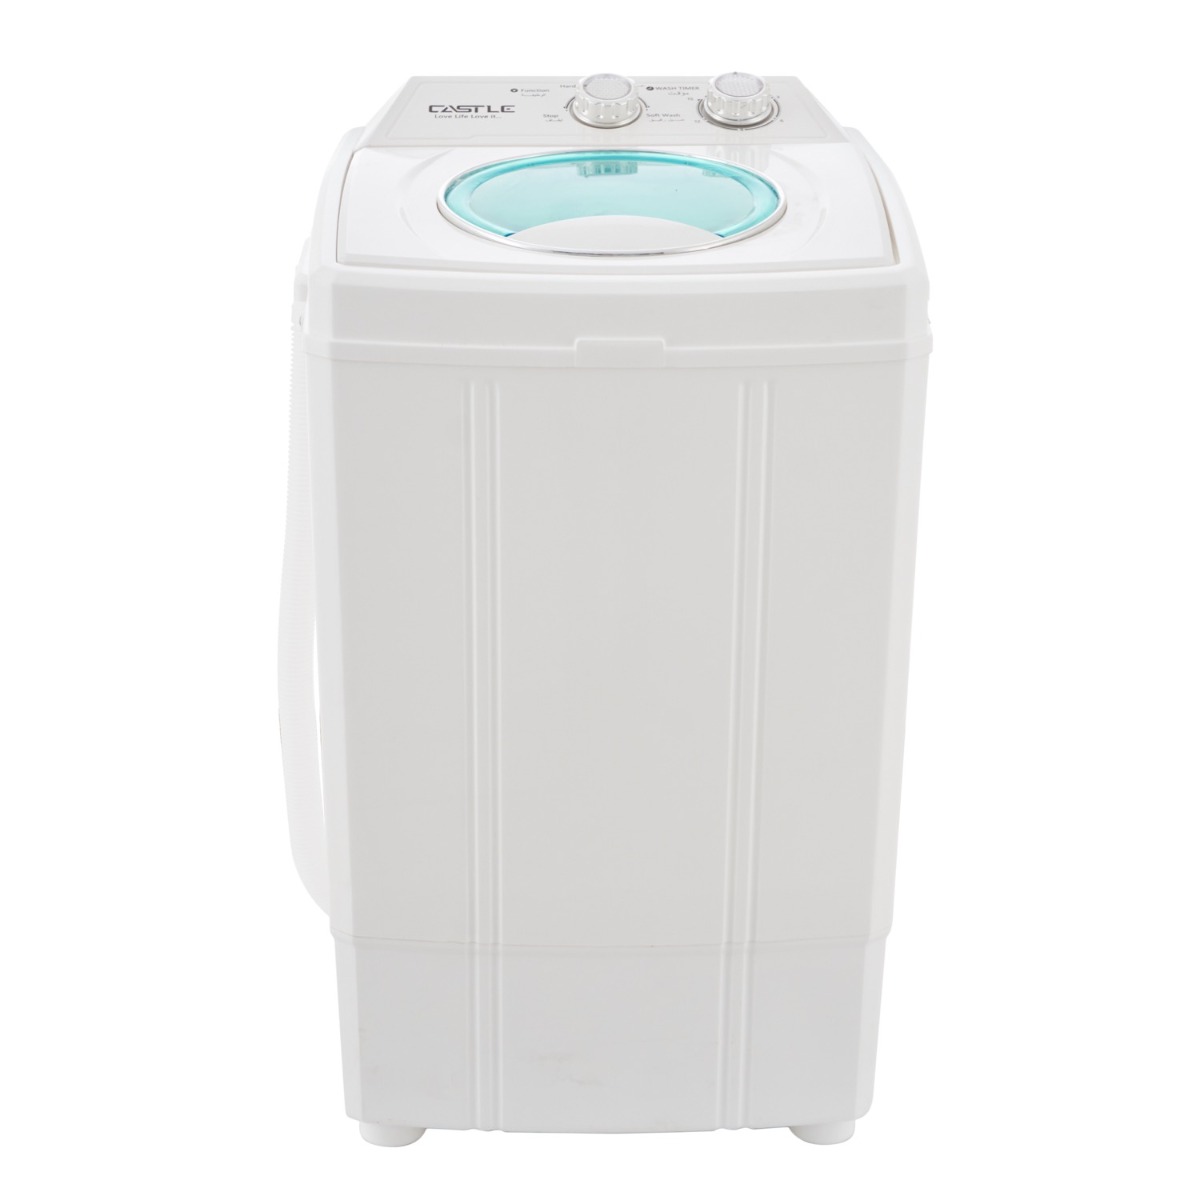 Castle Top Load Washing Machine, 4KG, White- CWM1450